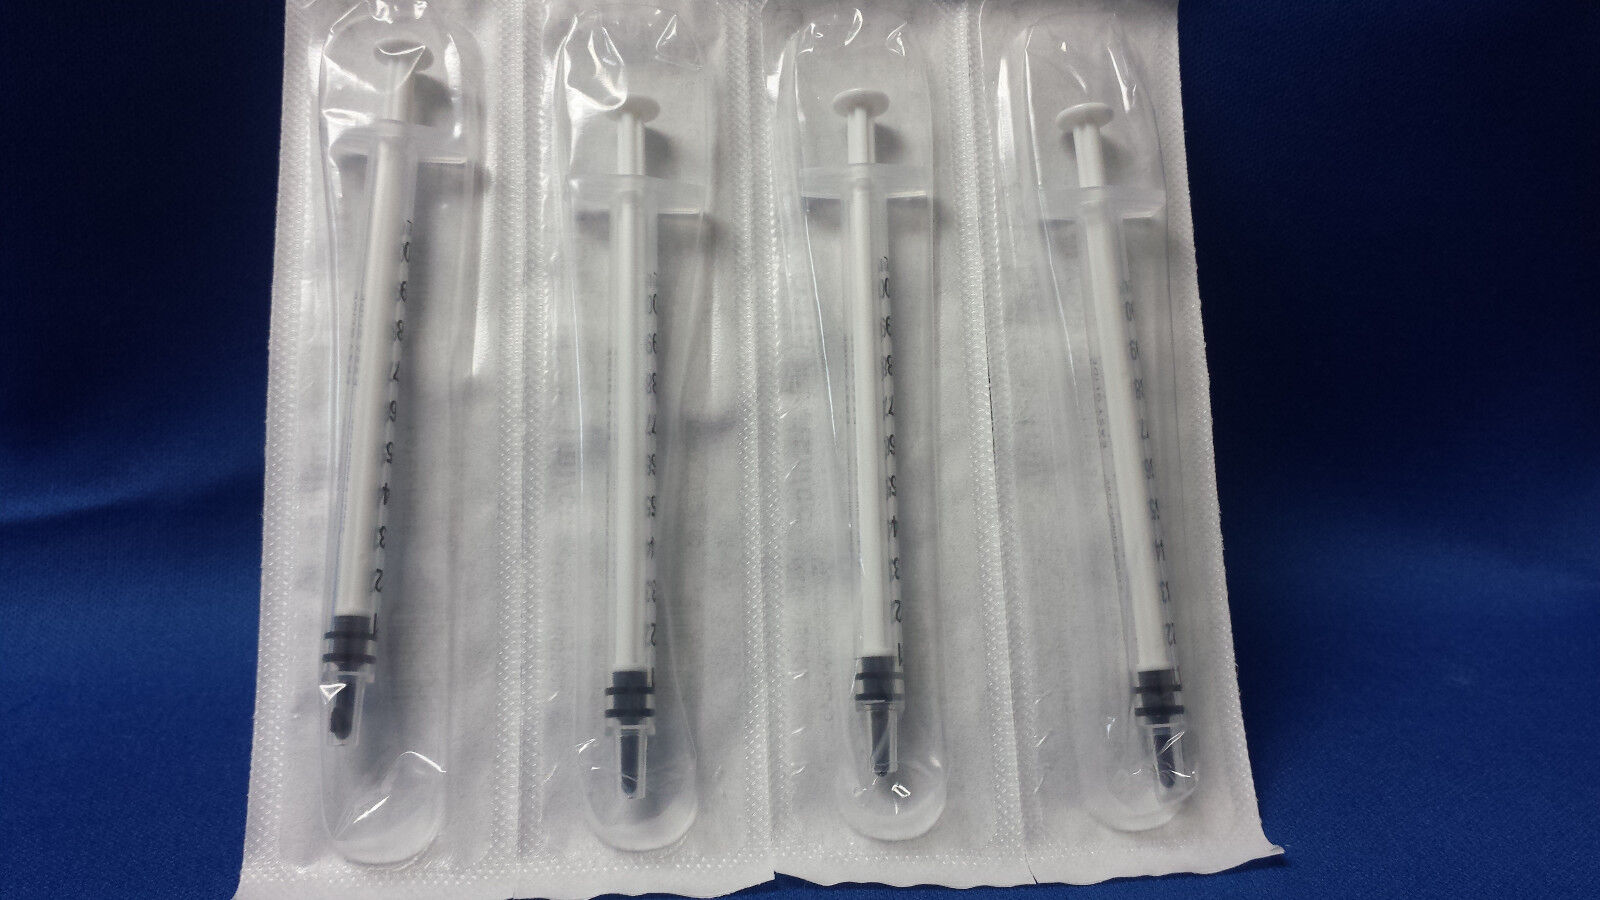 100- 1 cc Easy Glide Luer Slip Tuberculin Syringe 1ml Sterile NEW No Needle  Global medical 68-1250 - фотография #2